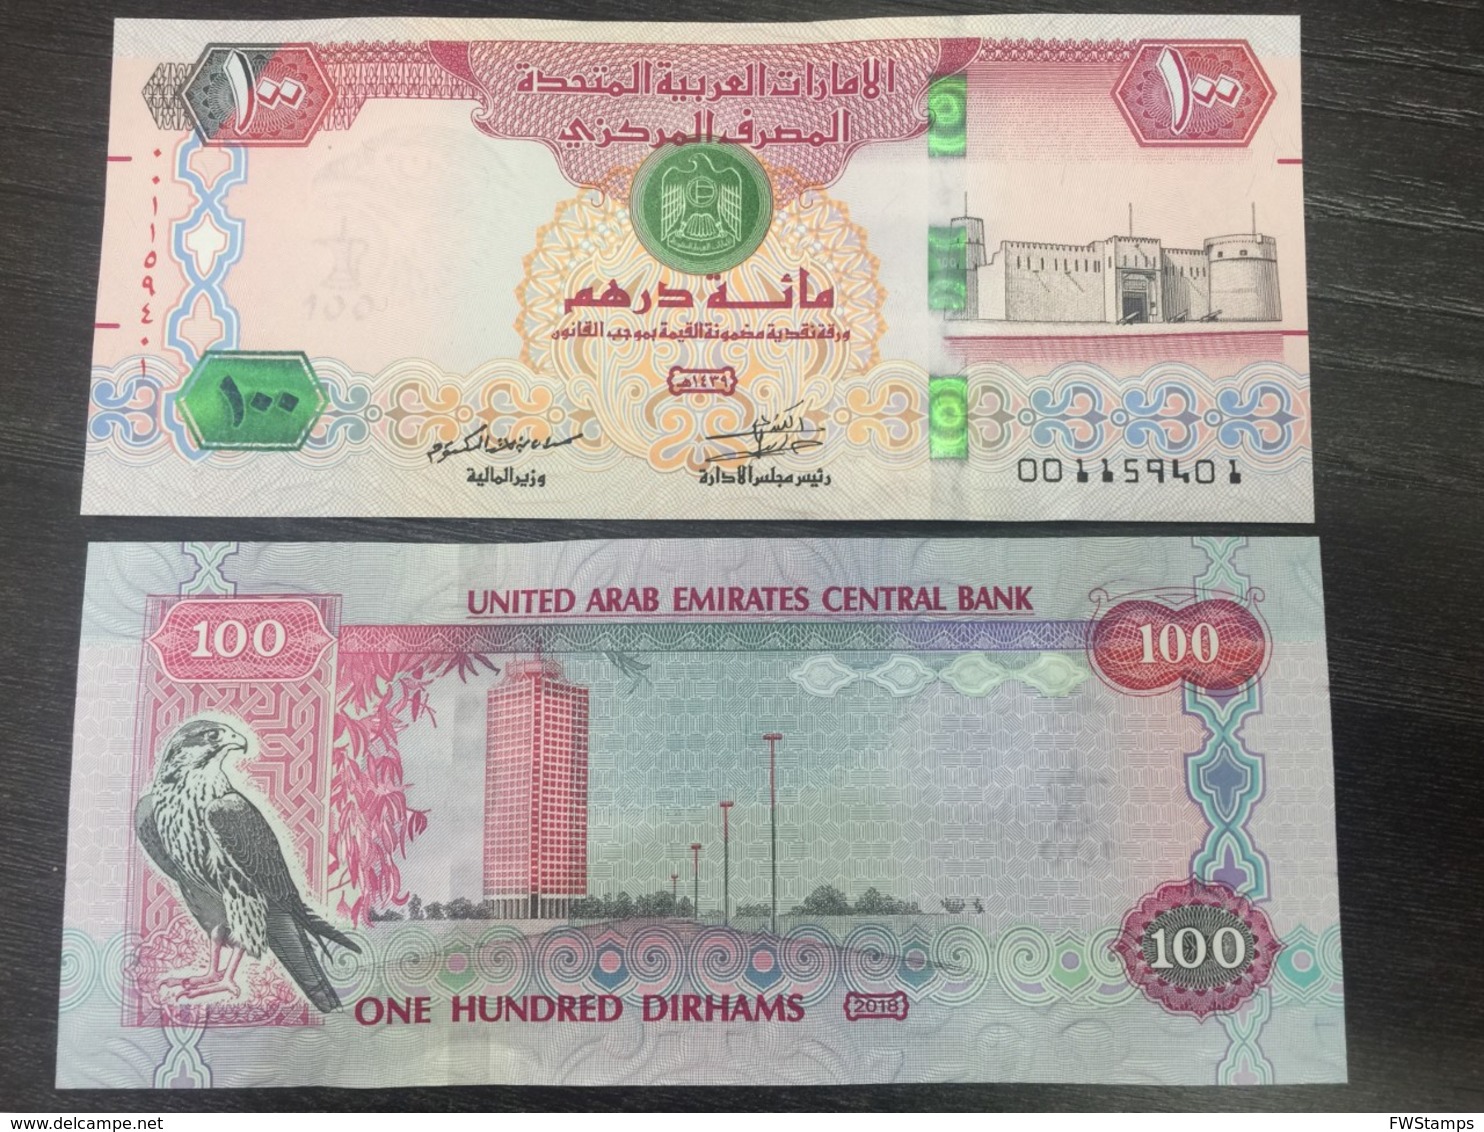 UAE 2018 100 Dirhams UNC Banknote New Redrawn Design With Security Features - United Arab Emirates